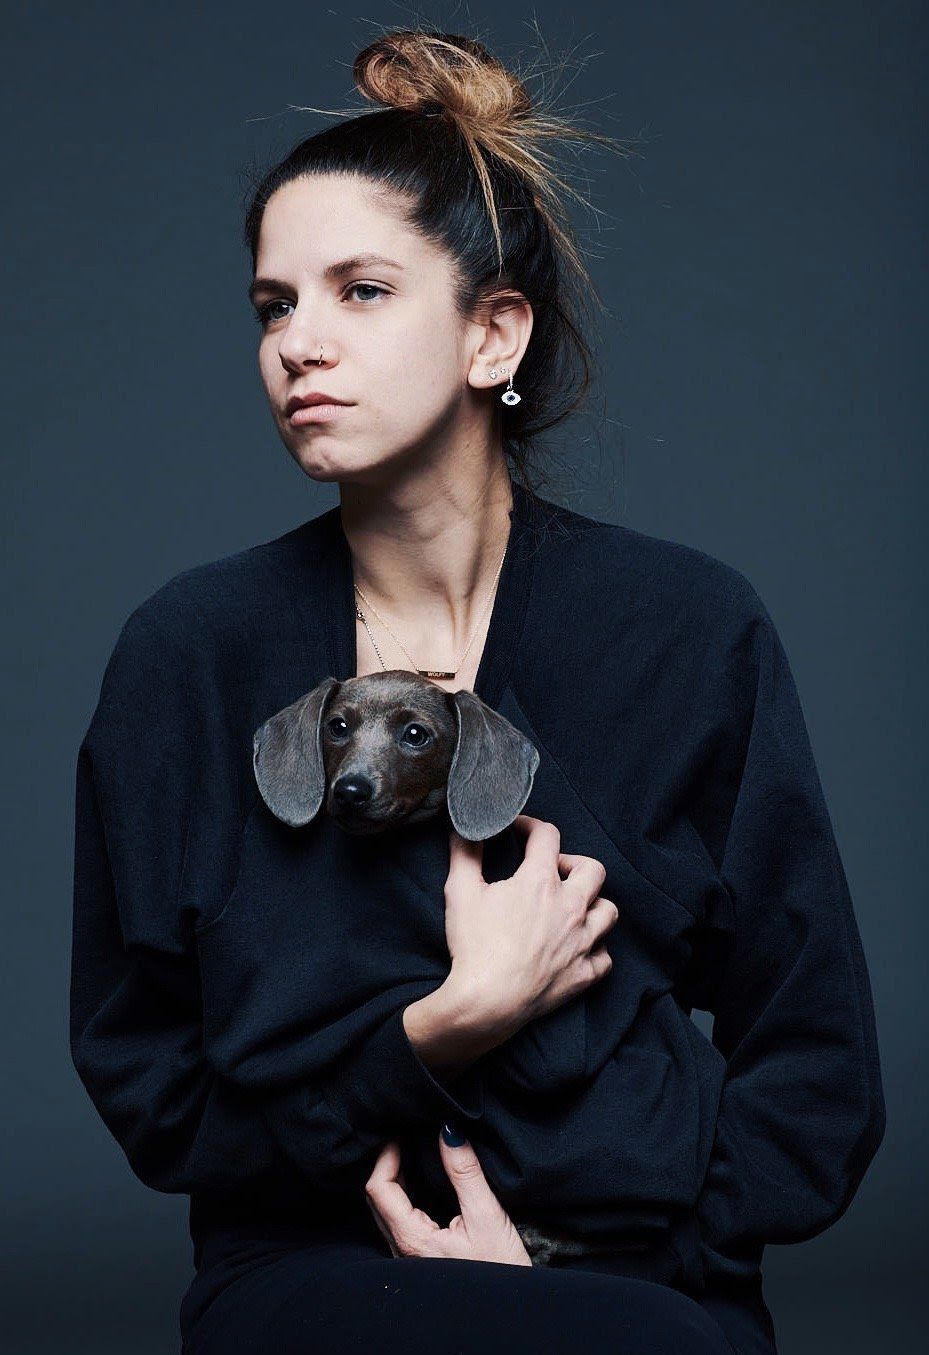 Caitlin Cronenberg portrait with her dog